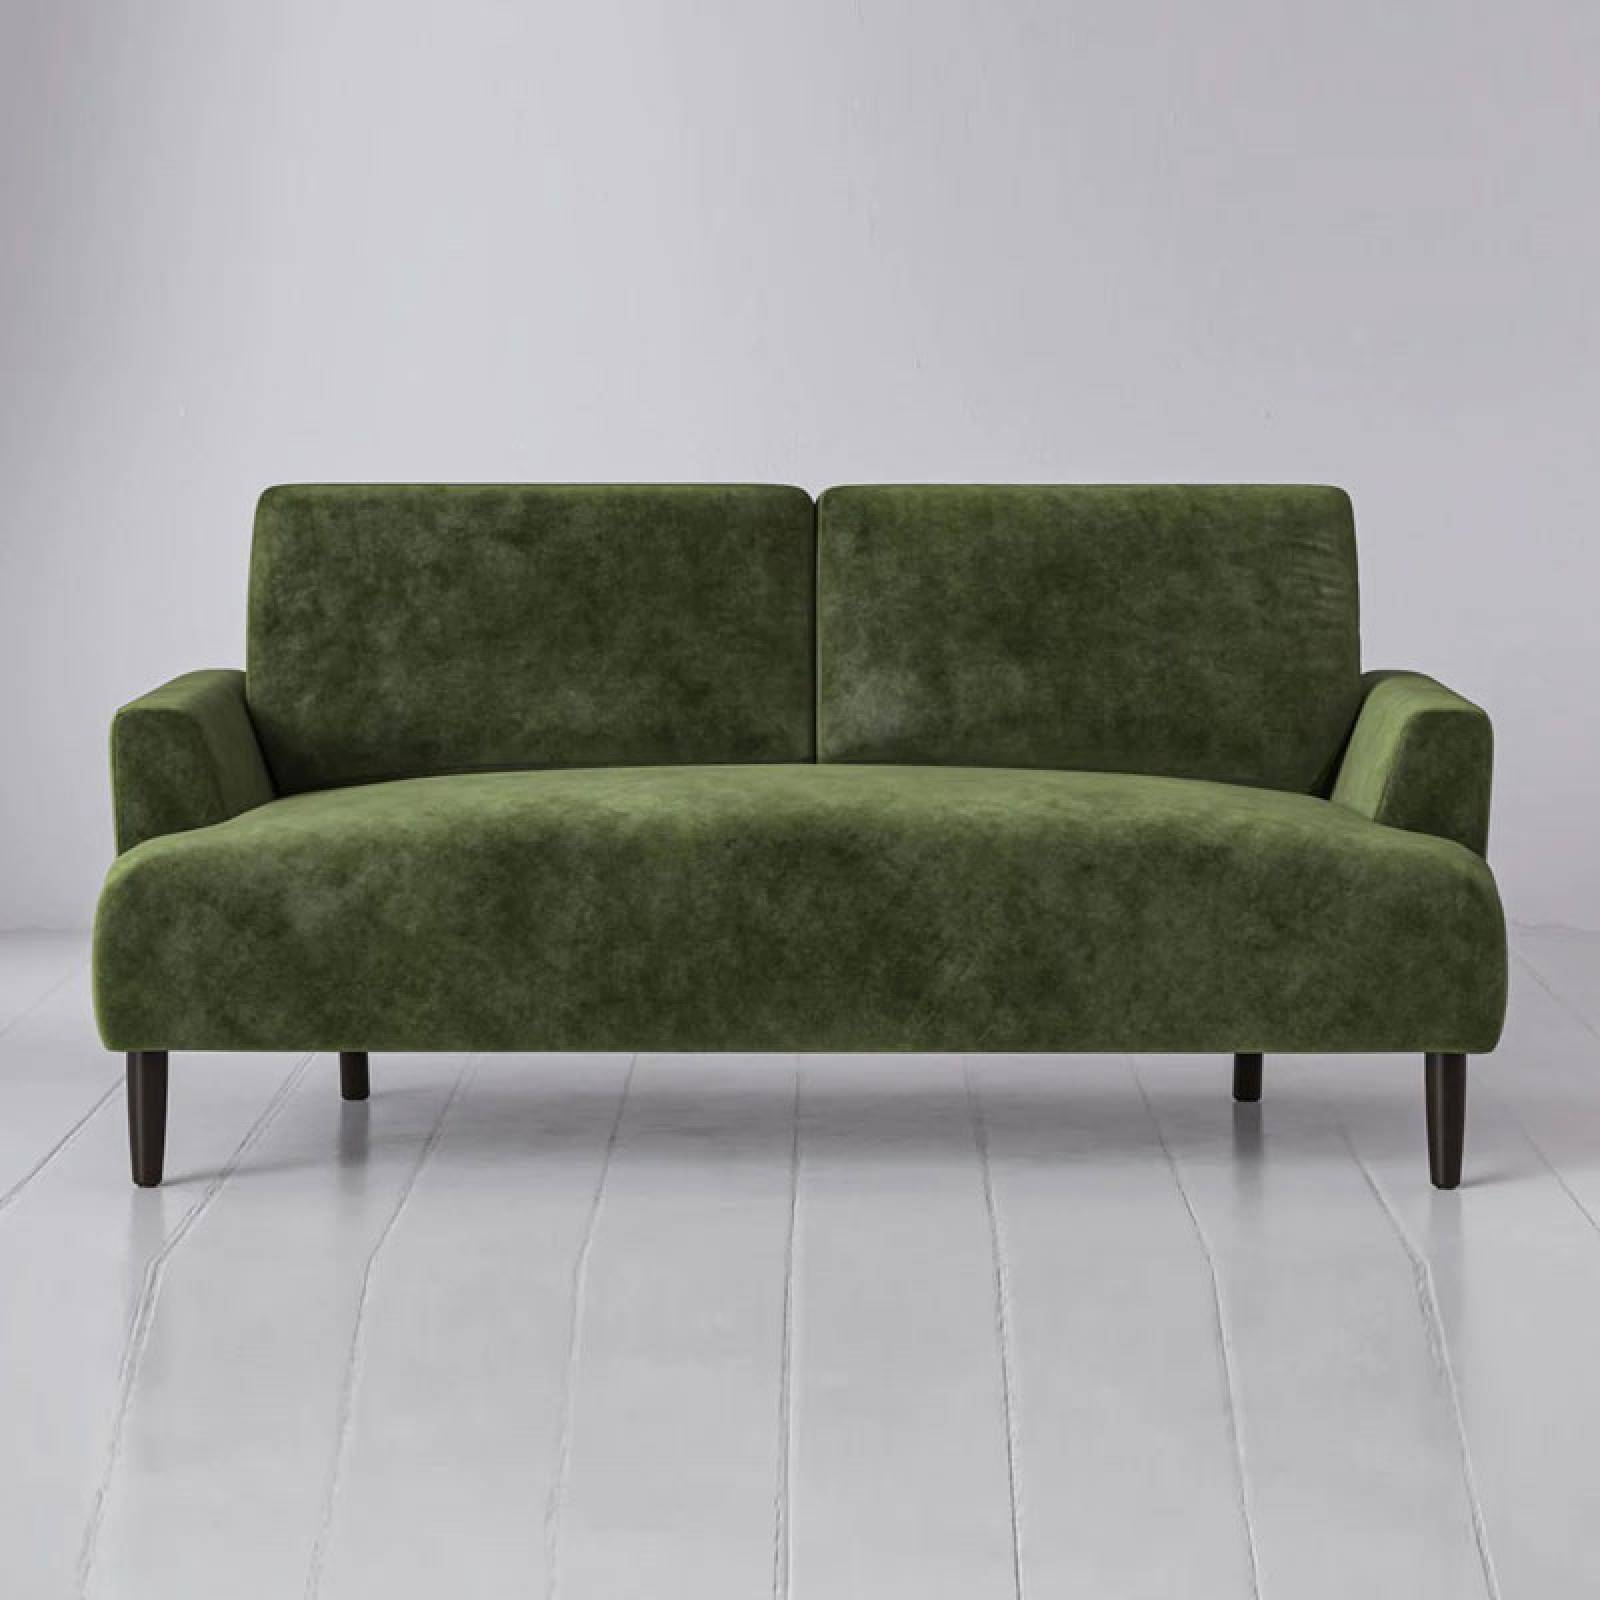 Swyft - Model 05 - 2 Seater Sofa